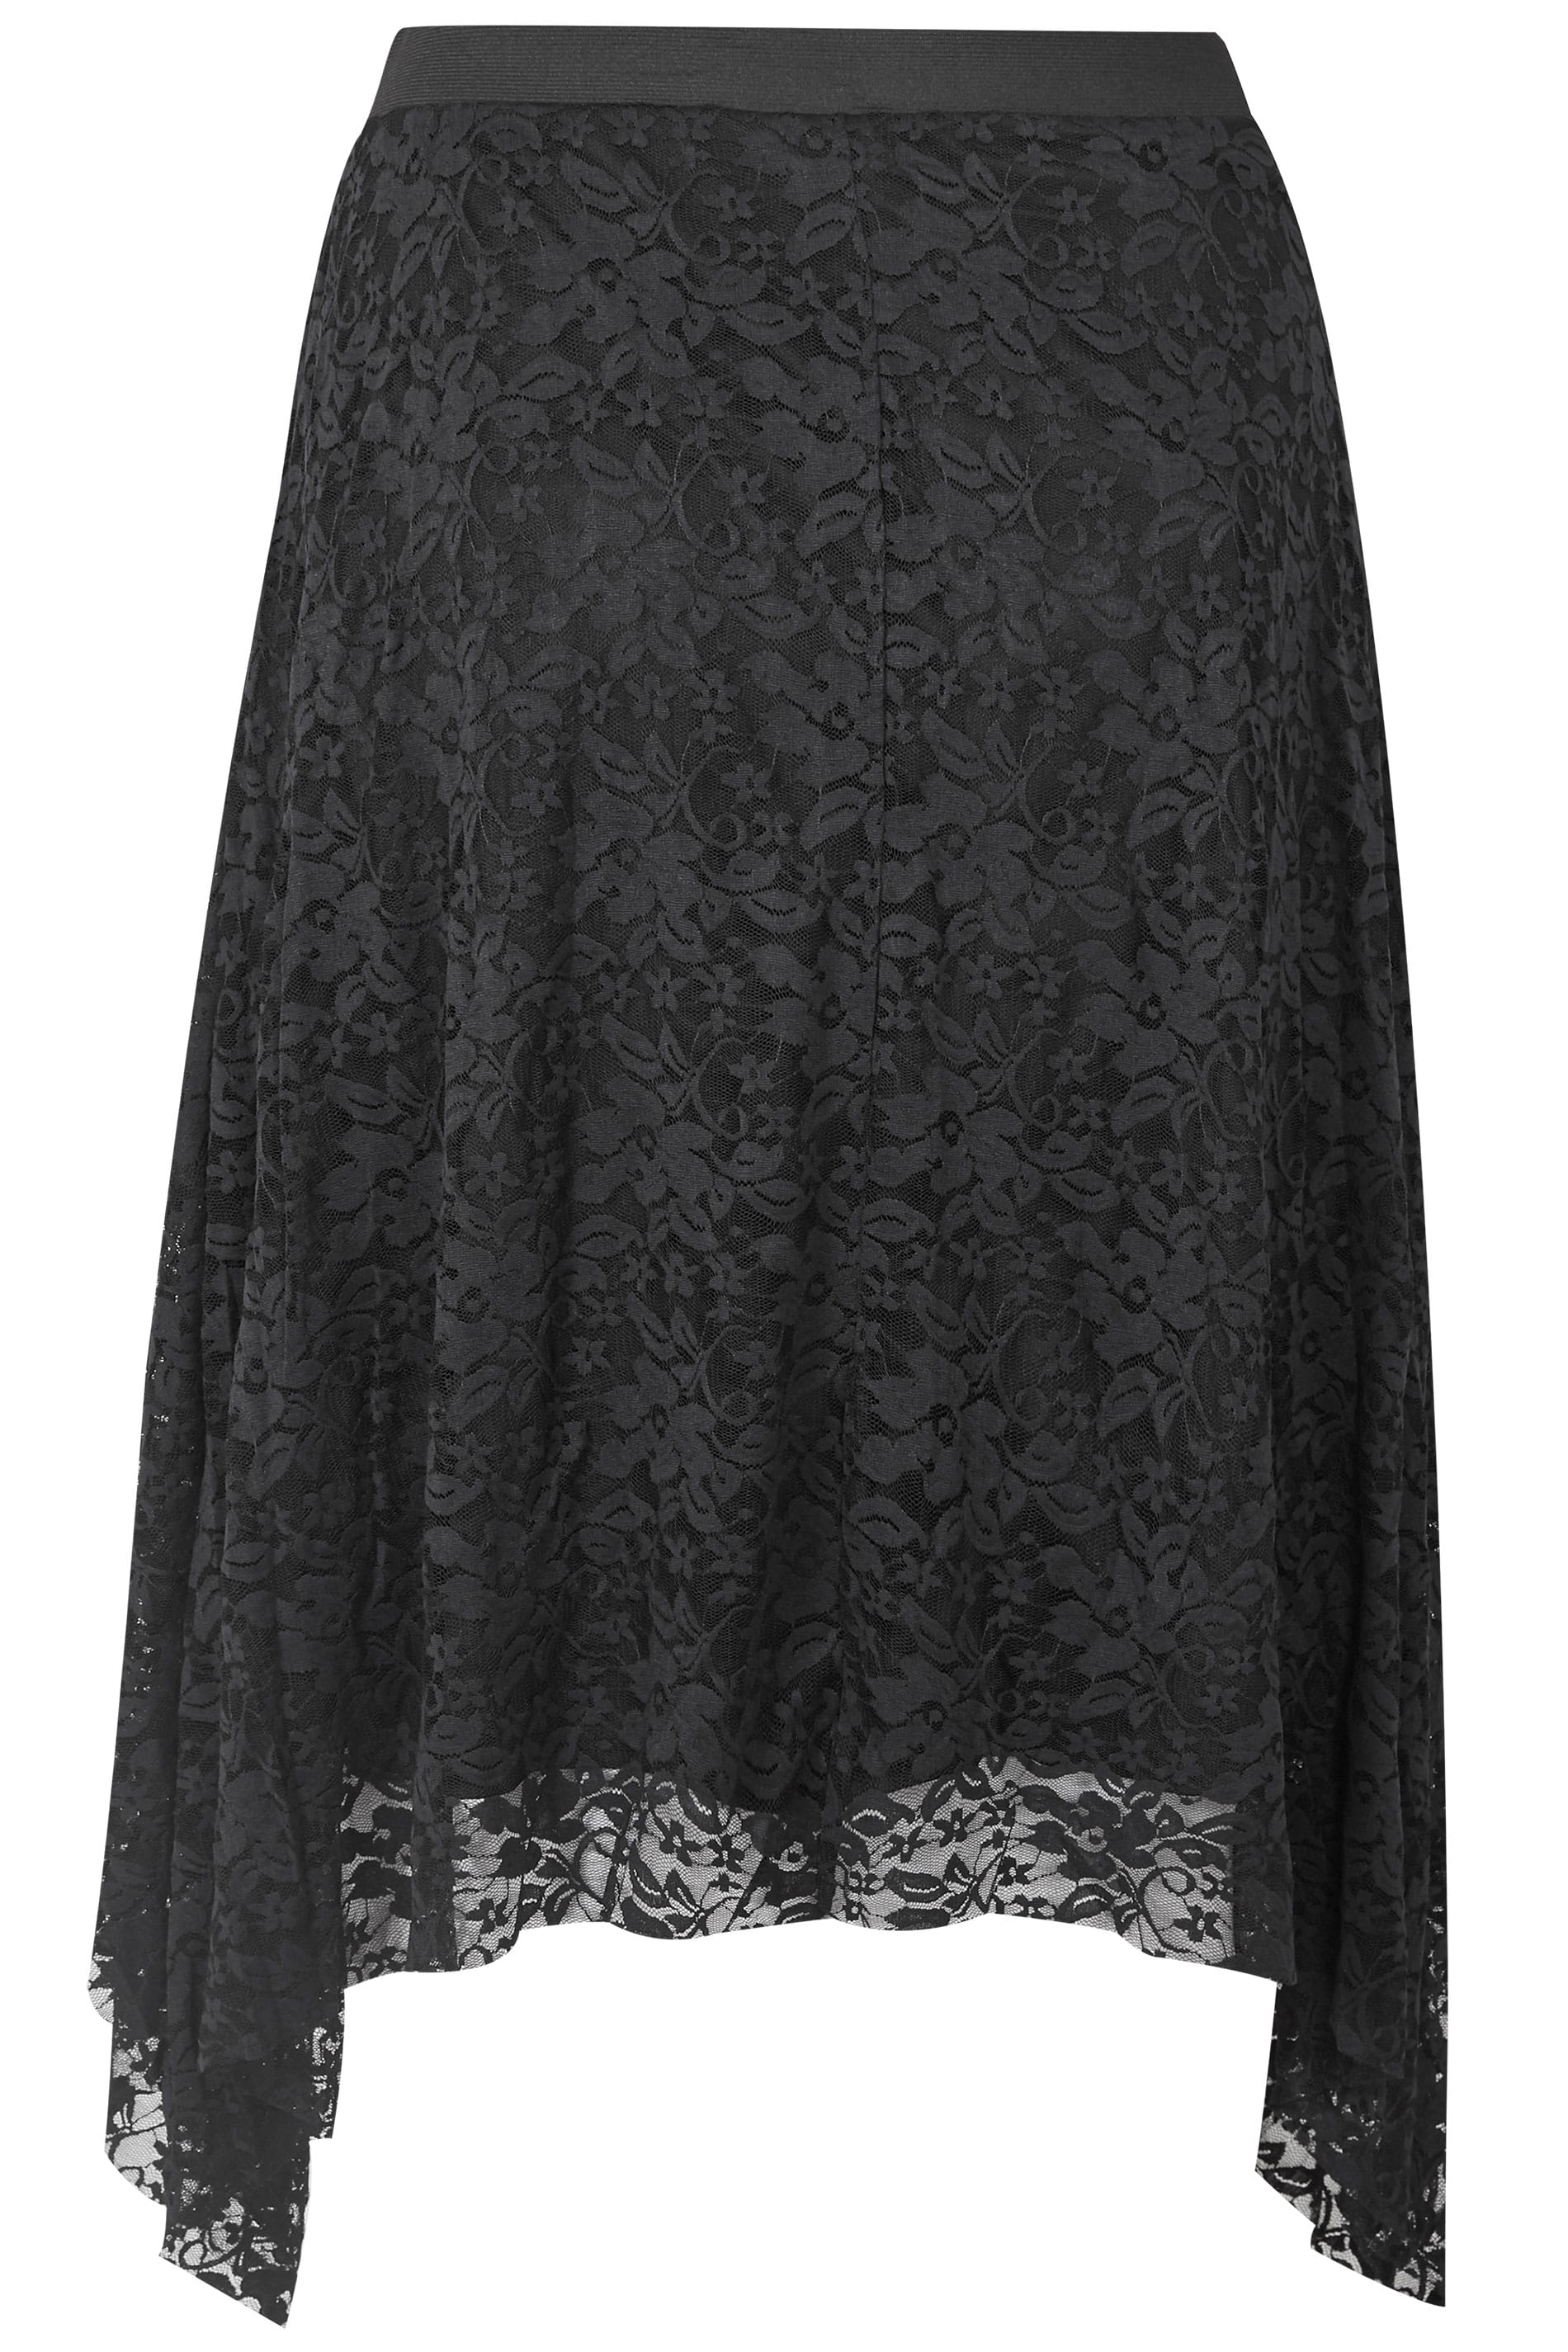 Black Lace Hanky Hem Skirt, Plus size 16 to 32